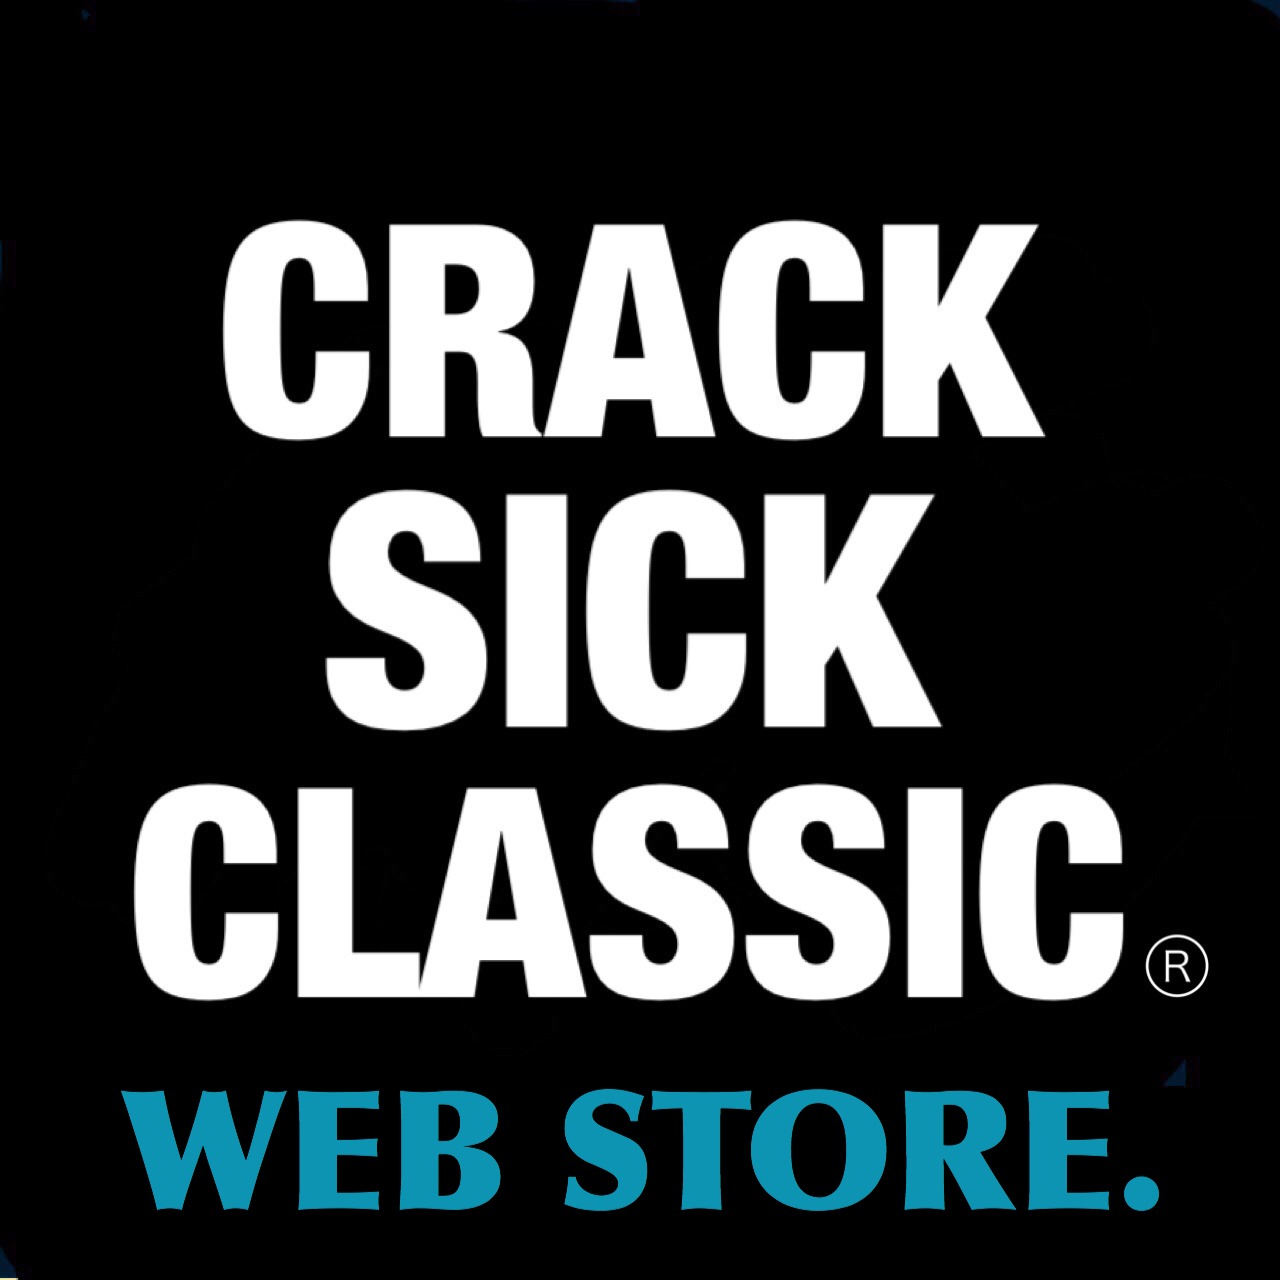 CRACK SICK CLASSIC WEB STORE